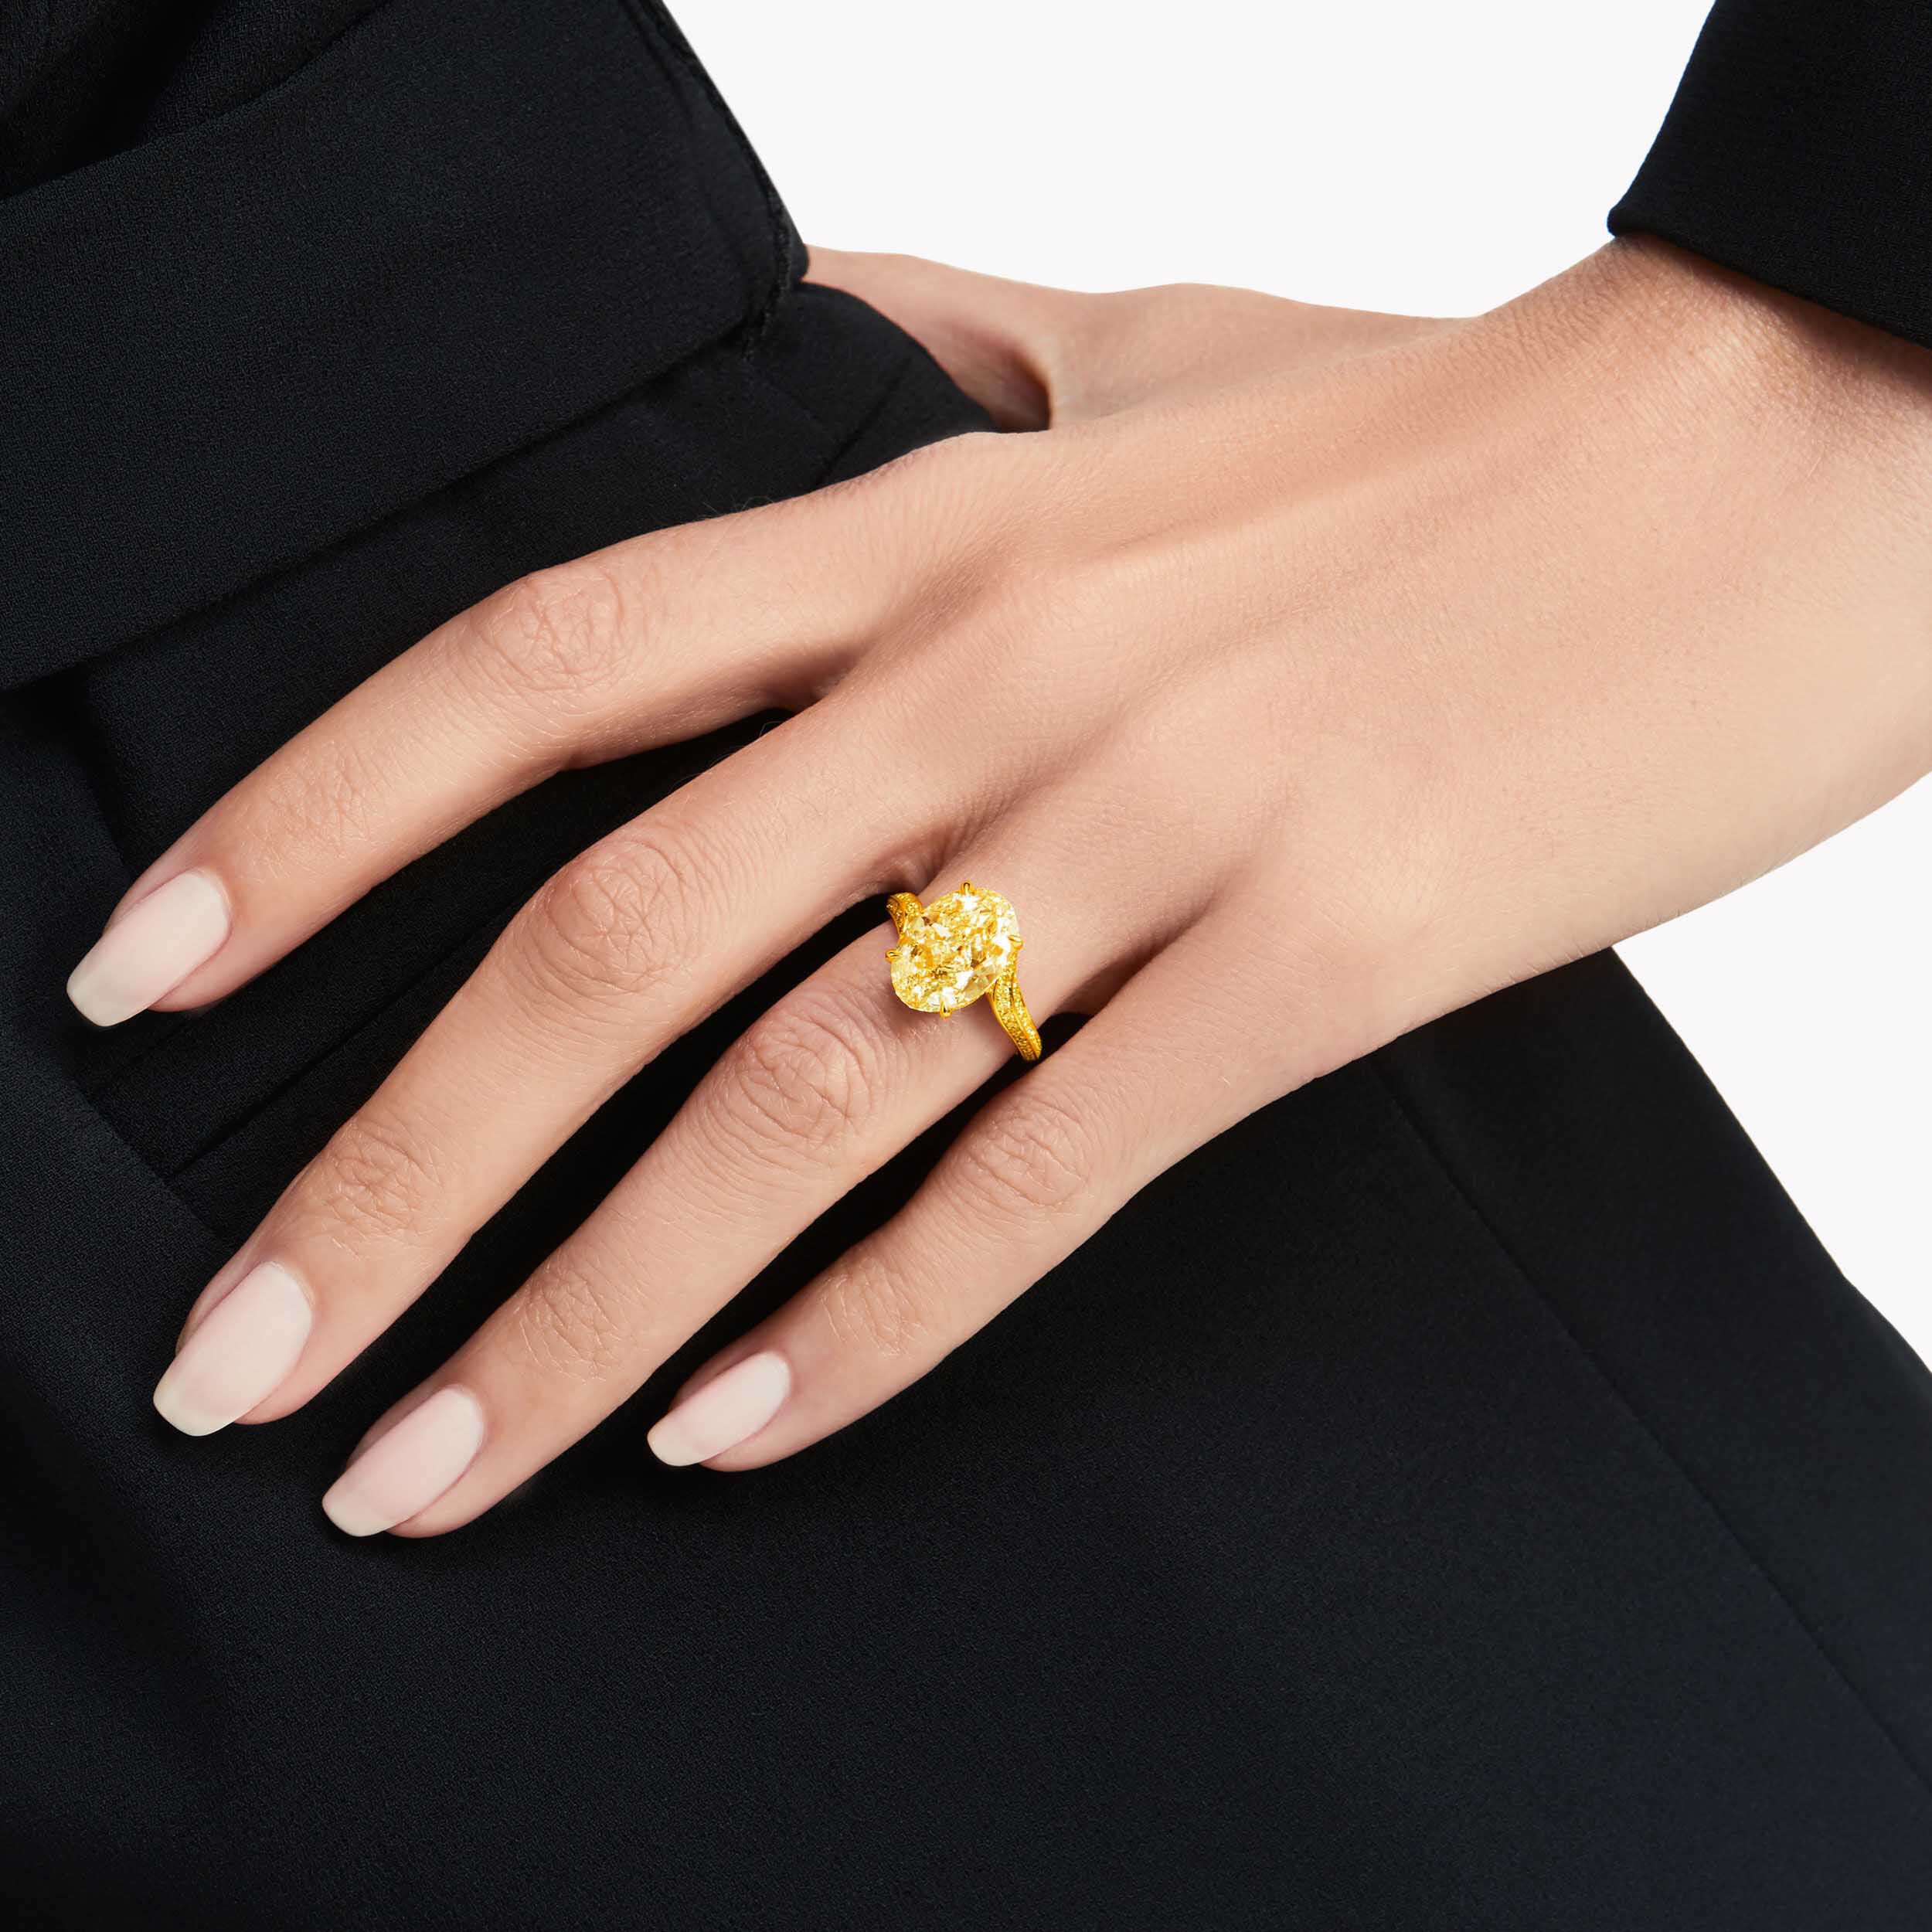 Model wearing a Graff oval yellow diamond ring.